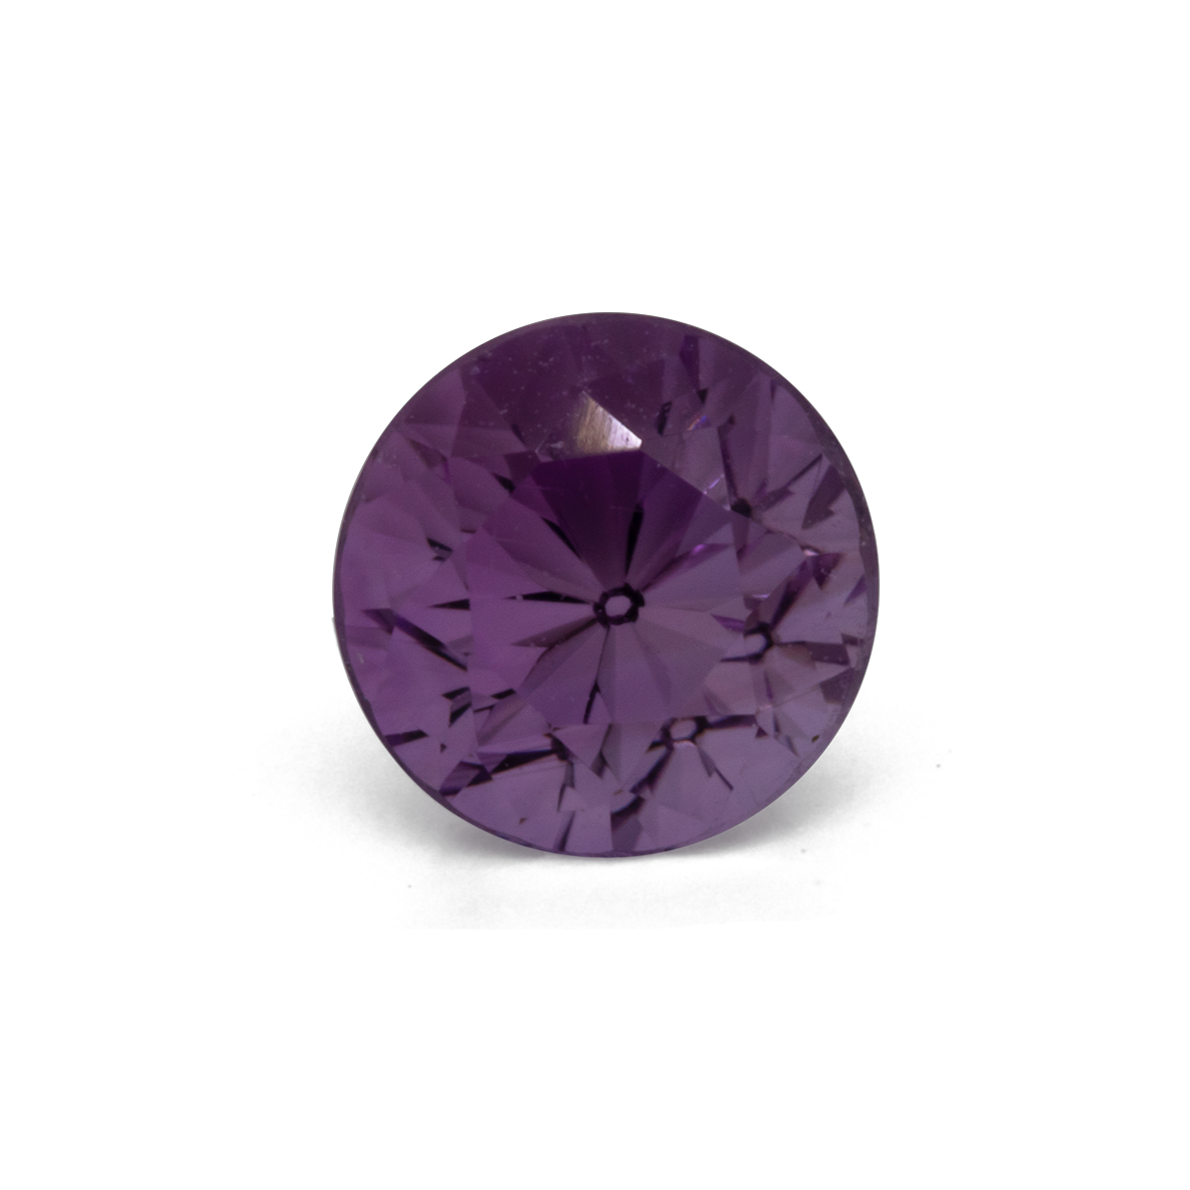 Amethyst - purple, round, 5.20x5.20x5,63 mm, 0.66 cts, No. AMY18001